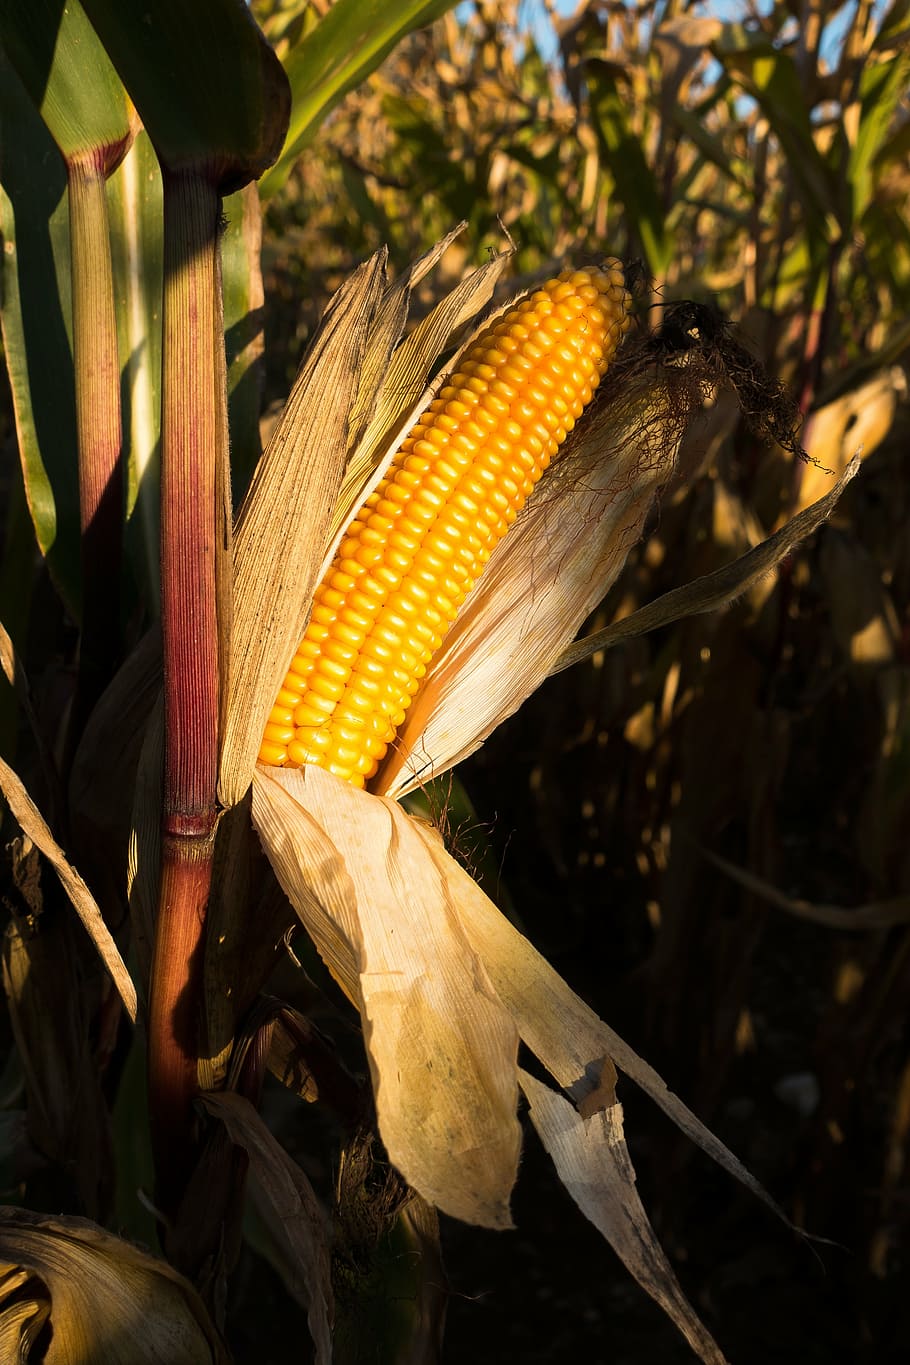 cornfield, corn on the cob, corn, zea mays, cereals, food, autumn, kukuruz, culture of maize, ripe